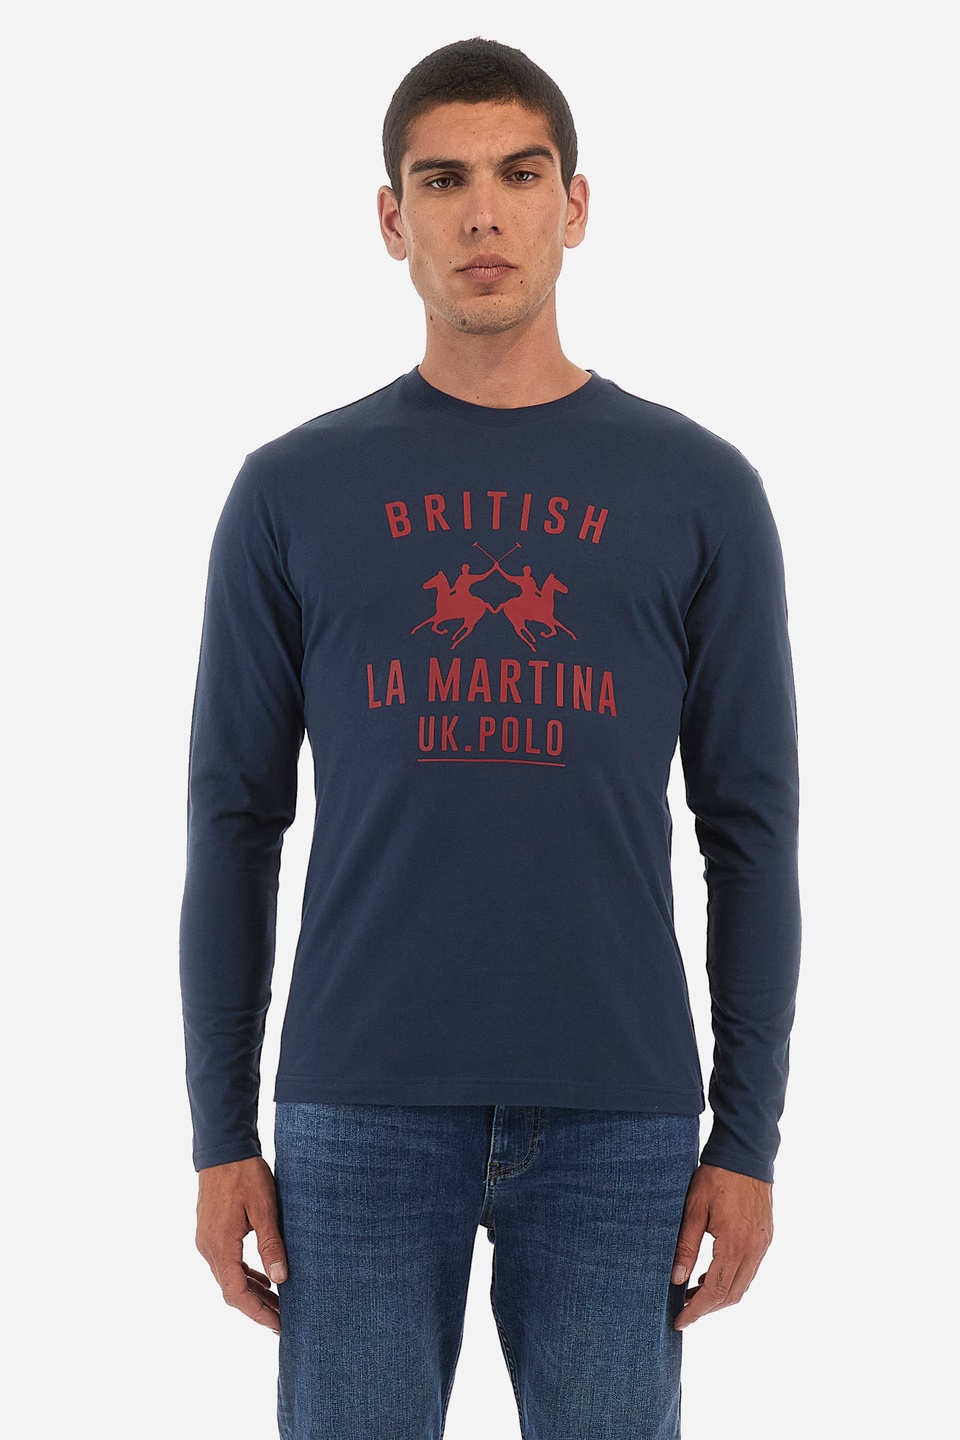 Tee-shirt homme coupe classique - Willson | La Martina - Official Online Shop